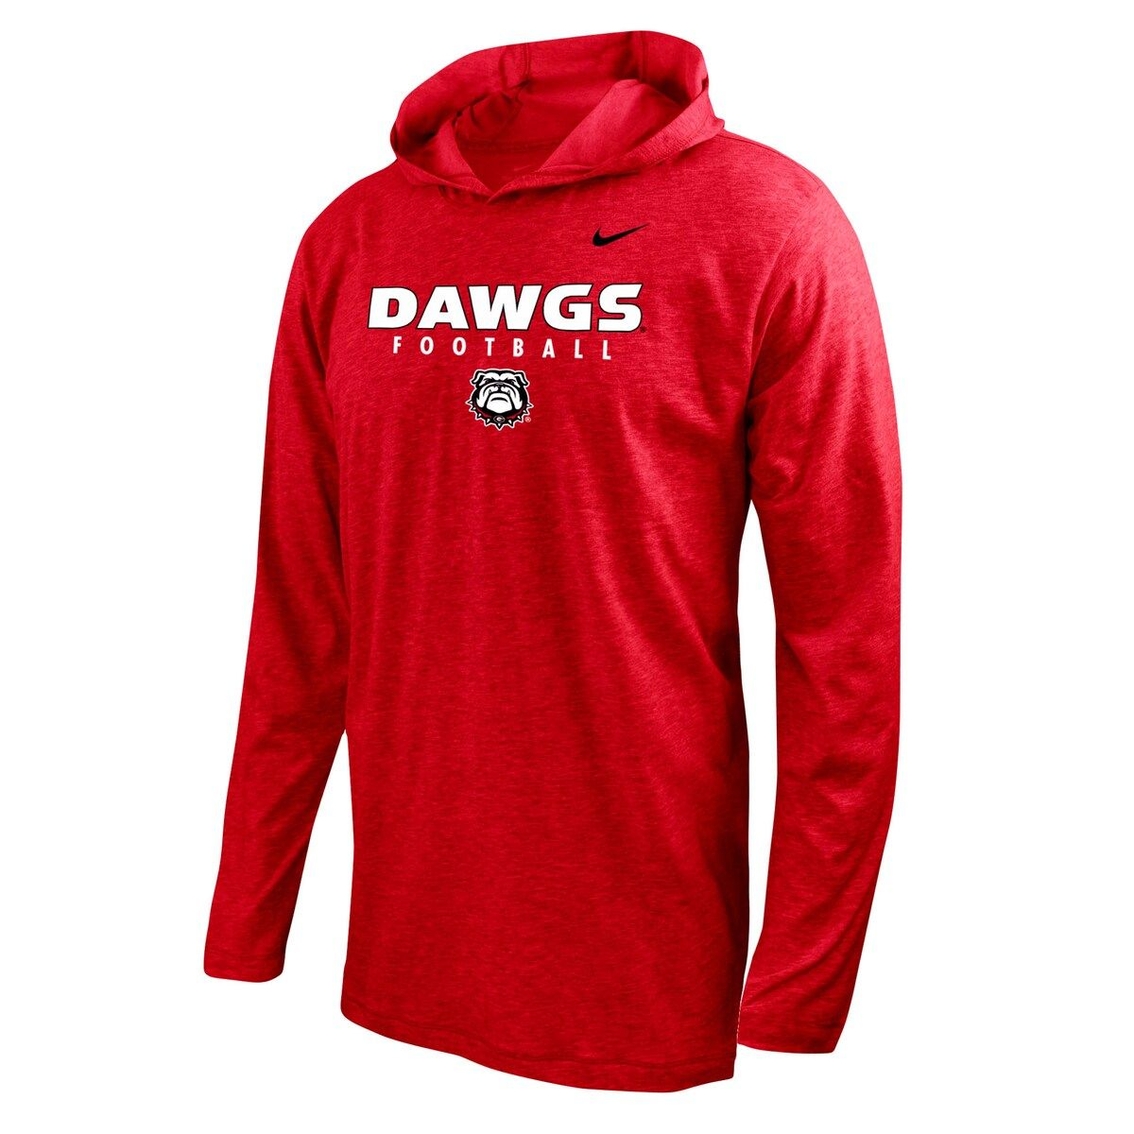 Nike Men's Red Georgia Bulldogs Football Long Sleeve Hoodie T-Shirt - Image 3 of 4